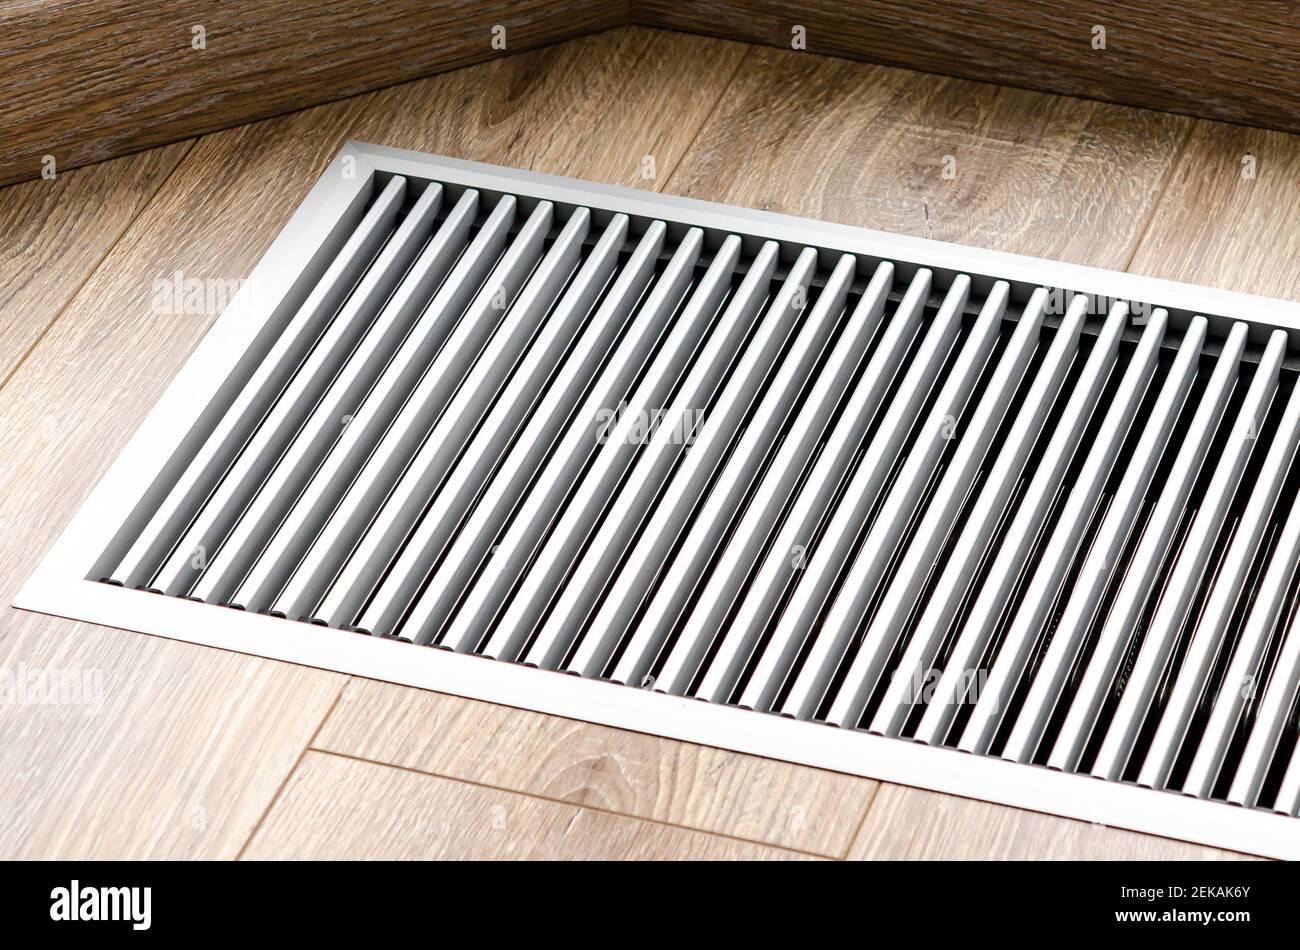 https://c8.alamy.com/comp/2EKAK6Y/protective-radiator-grille-built-into-the-floor-for-heating-panoramic-windows-heating-grid-with-ventilation-by-the-floor-in-hardwood-flooring-2EKAK6Y.jpg